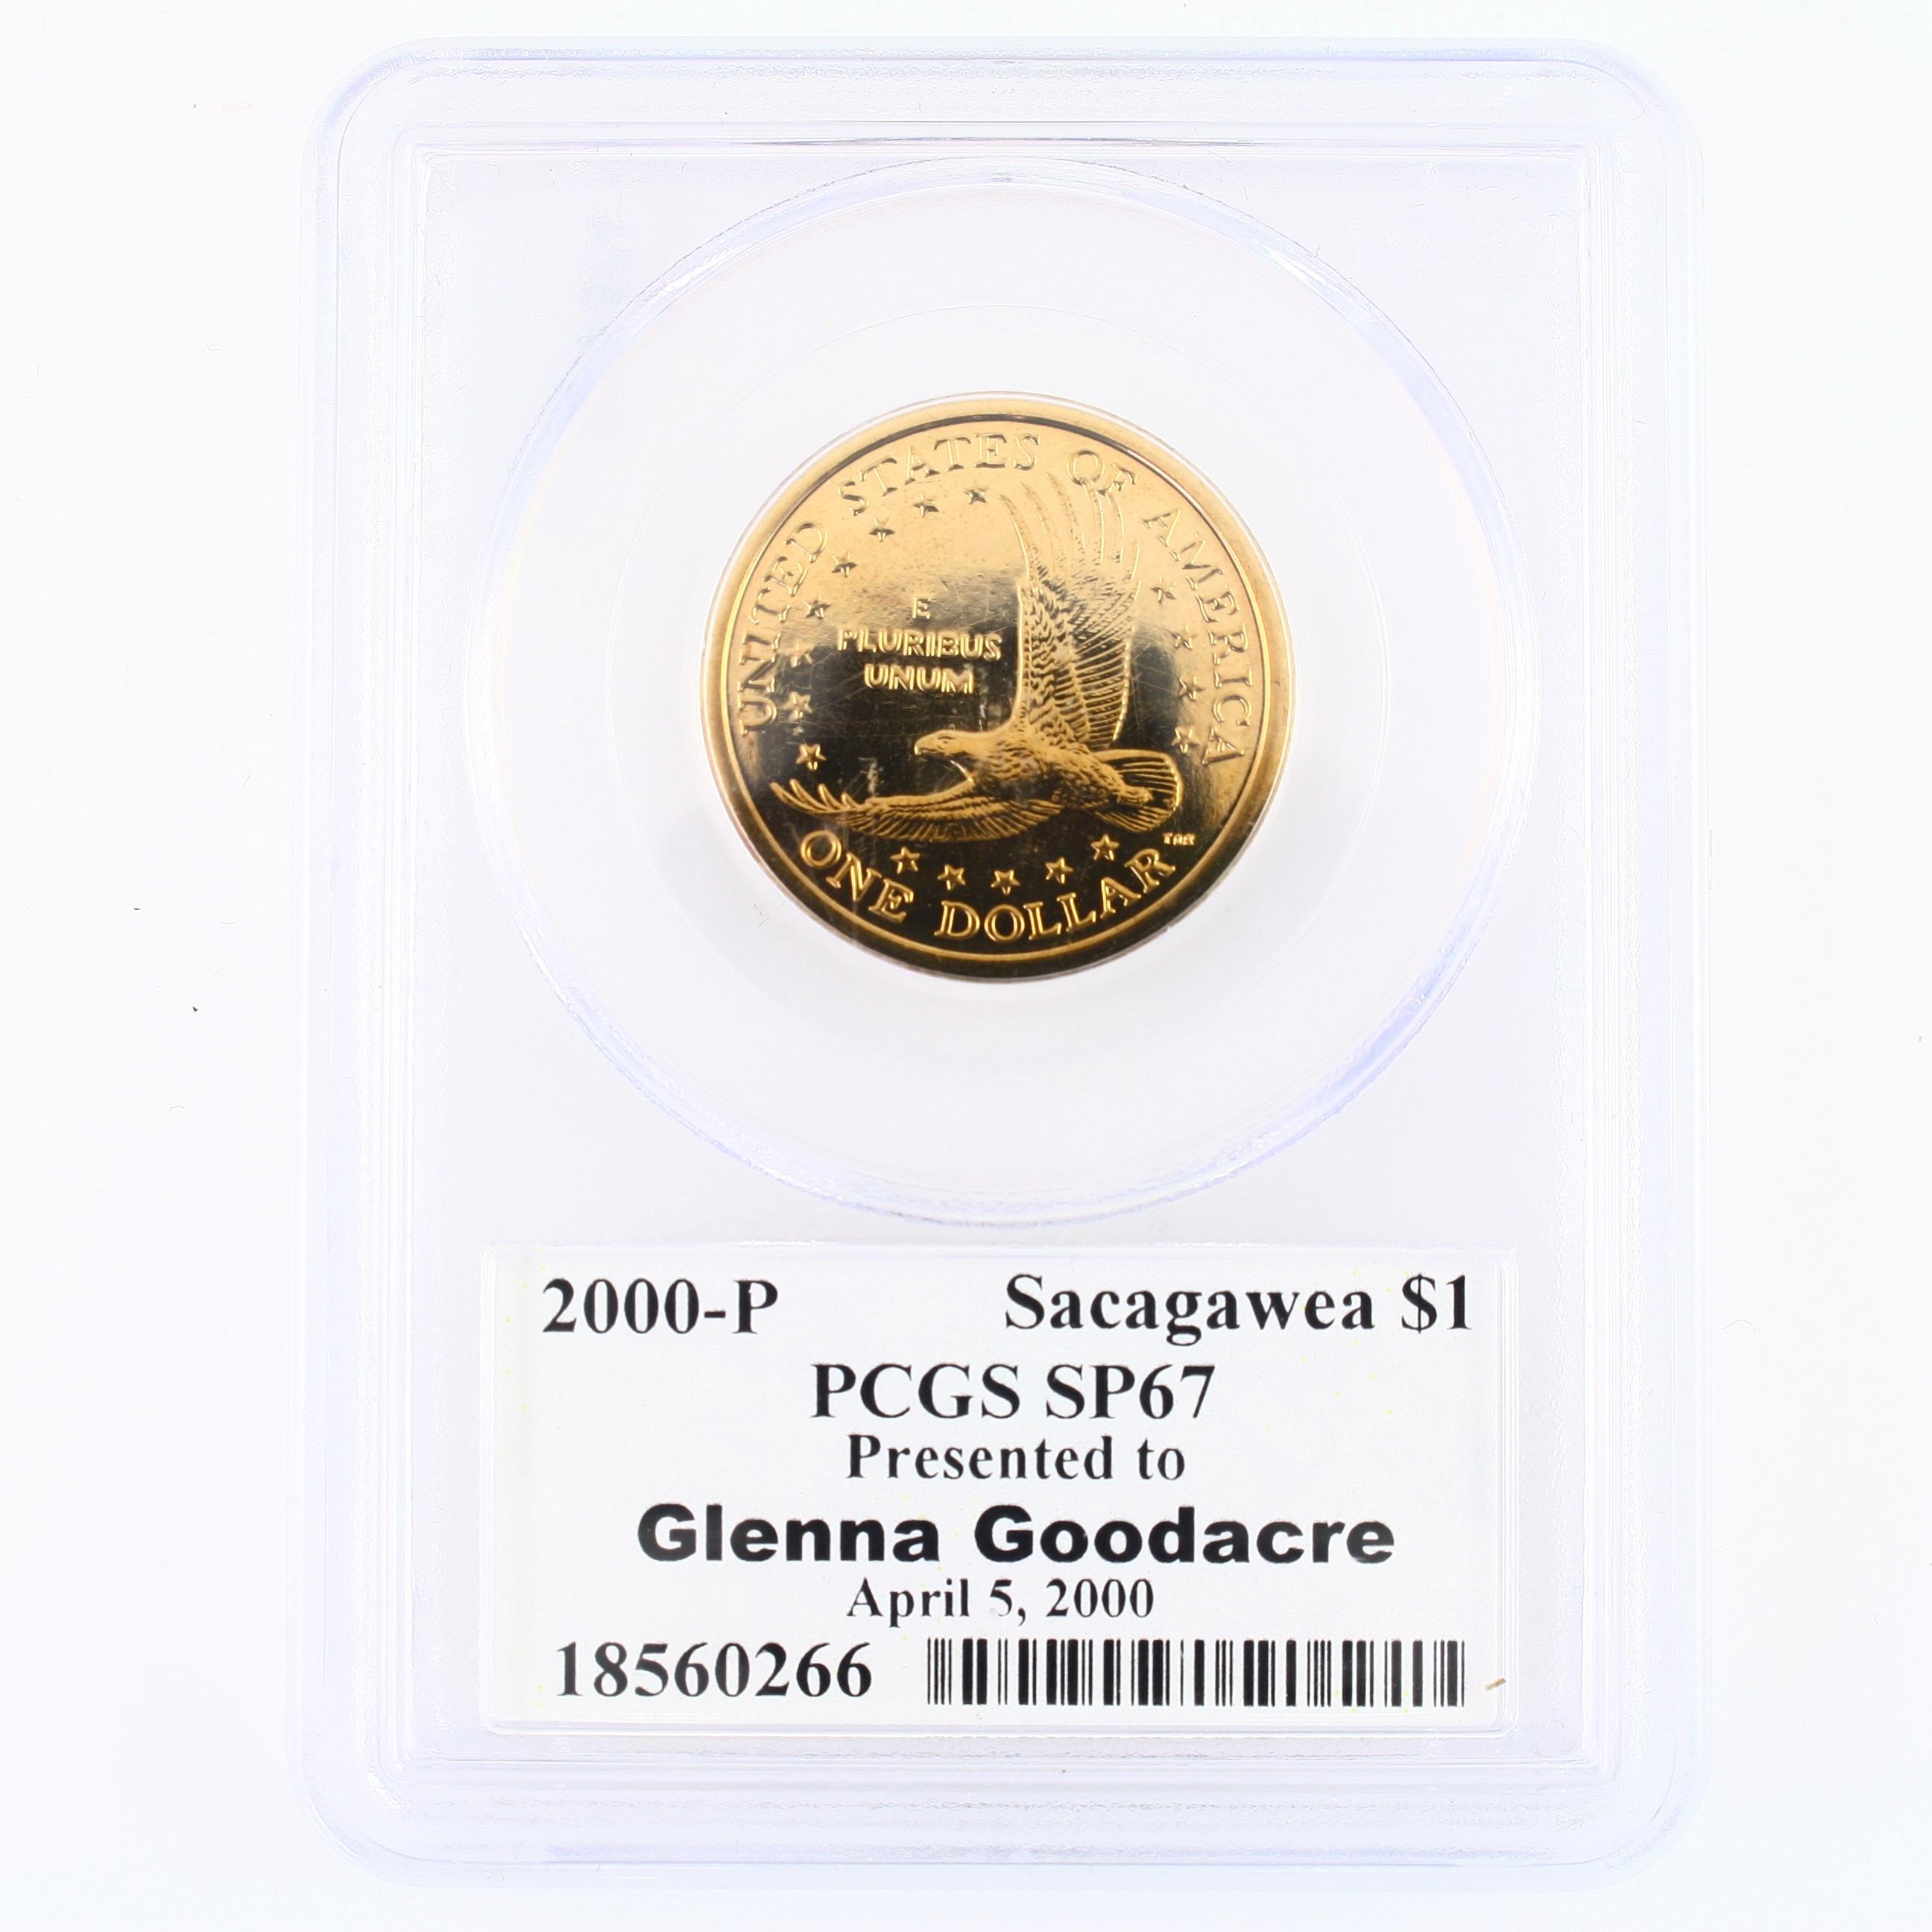 Certified 2000-P U.S. Glenna Goodacre presentation Sacagawea dollar